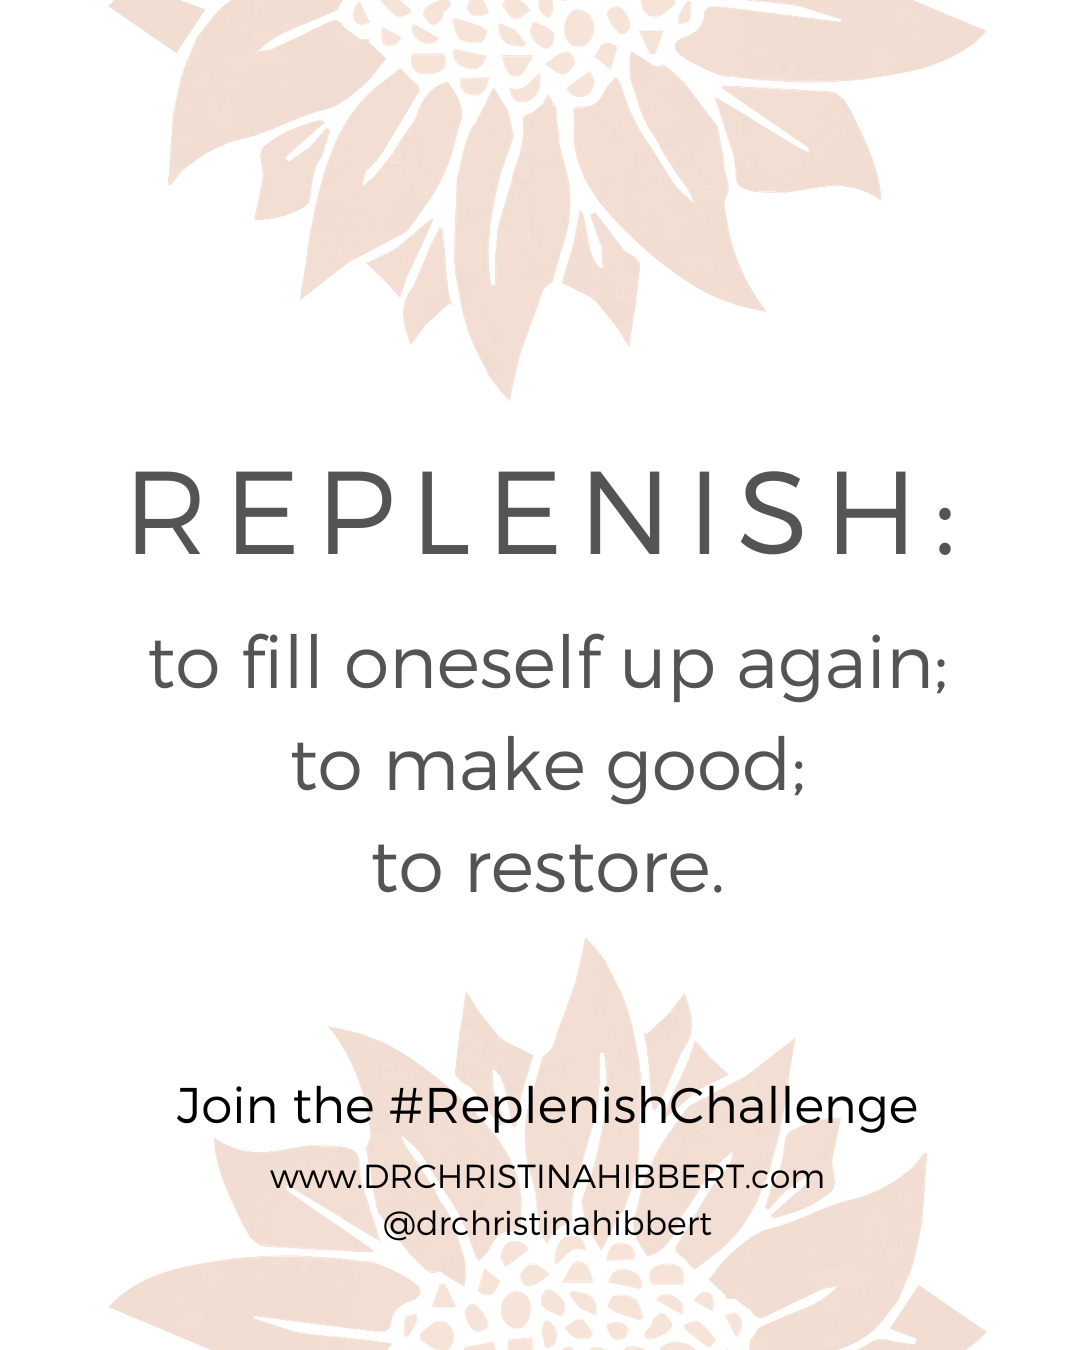 Replenish definition, 8-Day REPLENISH Self-Care Challenge, Dr Christina Hibbert